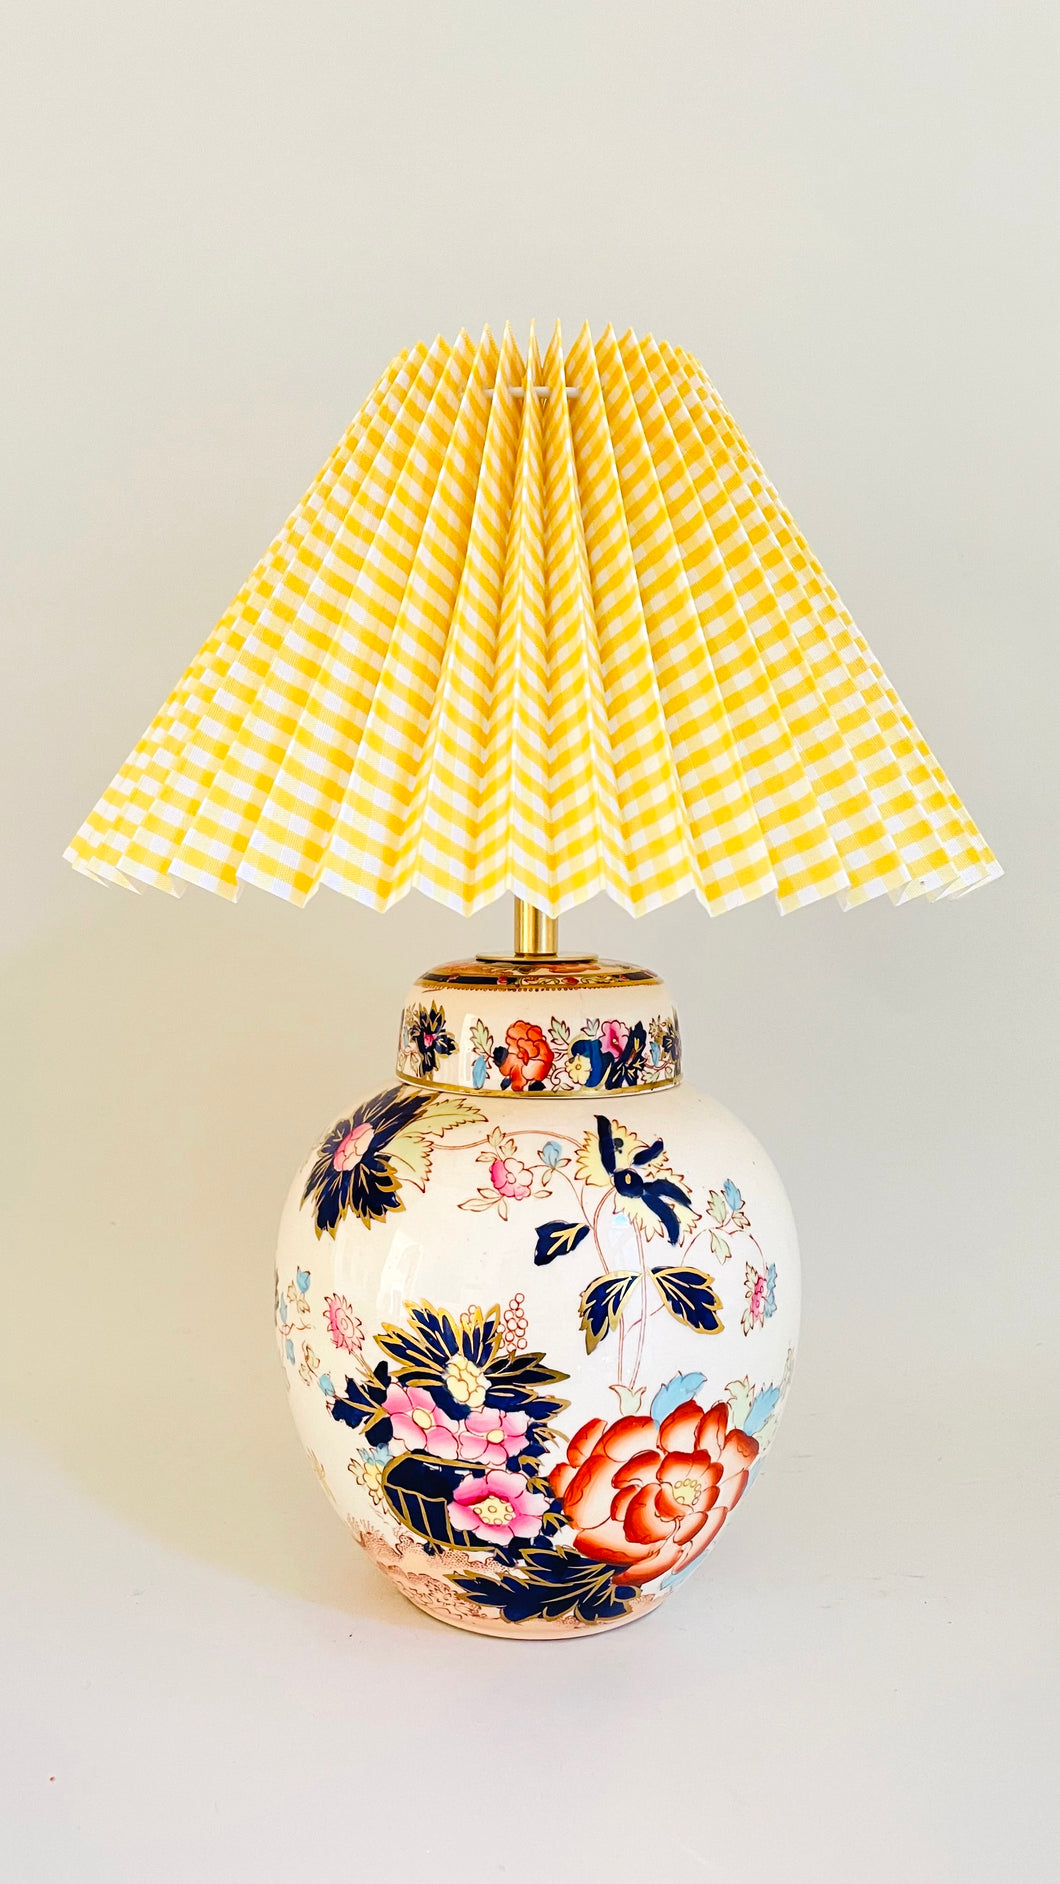 Antique Mason’s Jar Lamp - pre order for w/c April 22nd